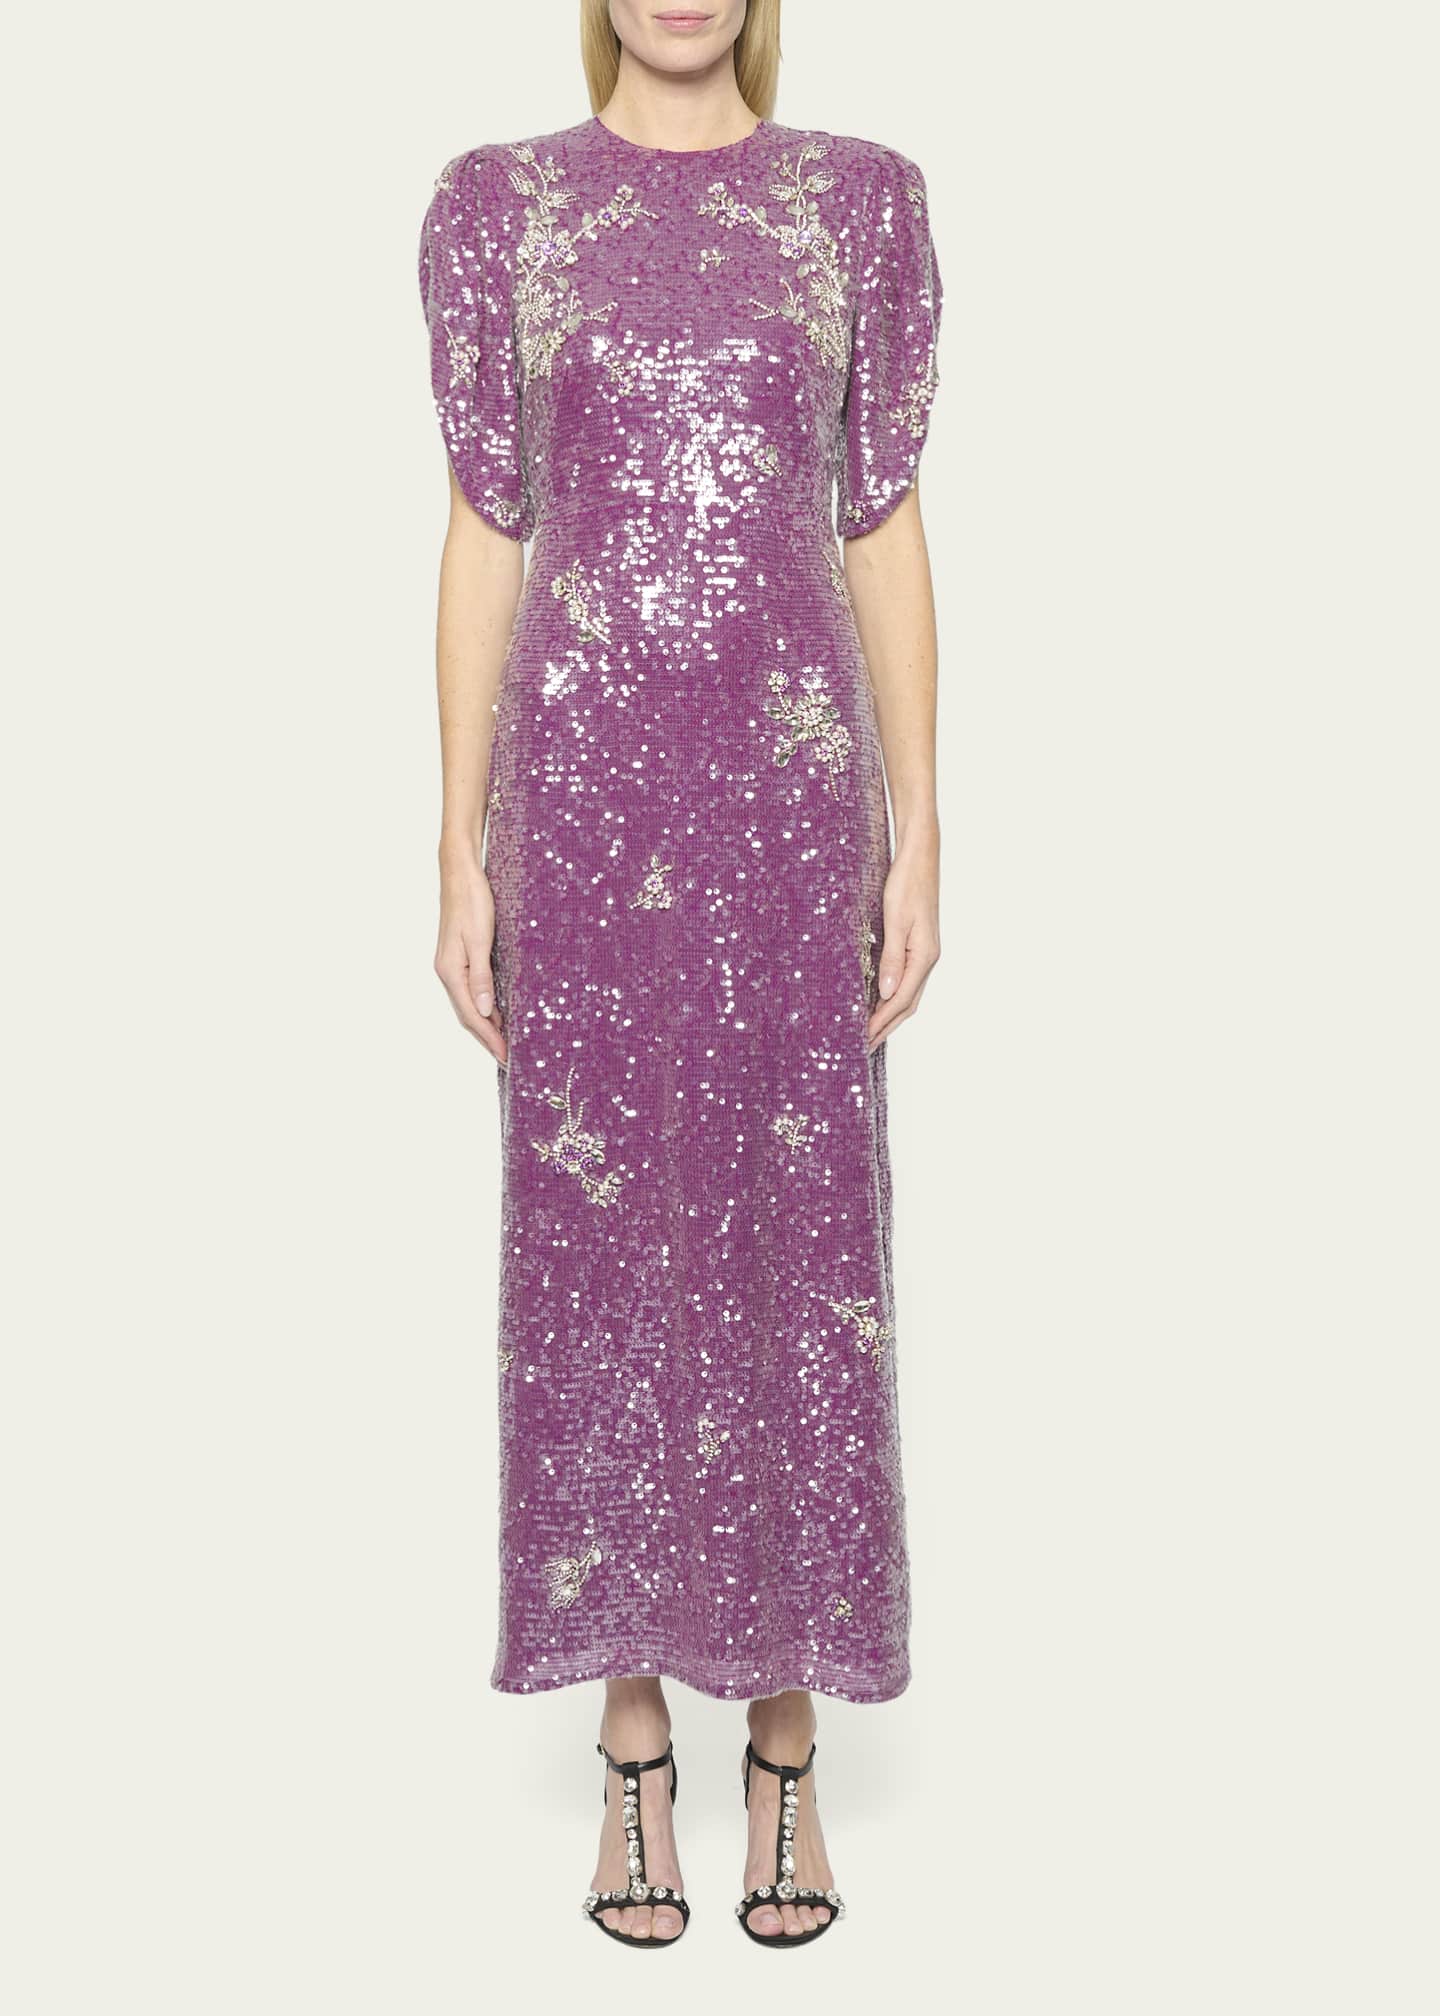 Erdem Sequin-Embellished Beaded Dress - Bergdorf Goodman